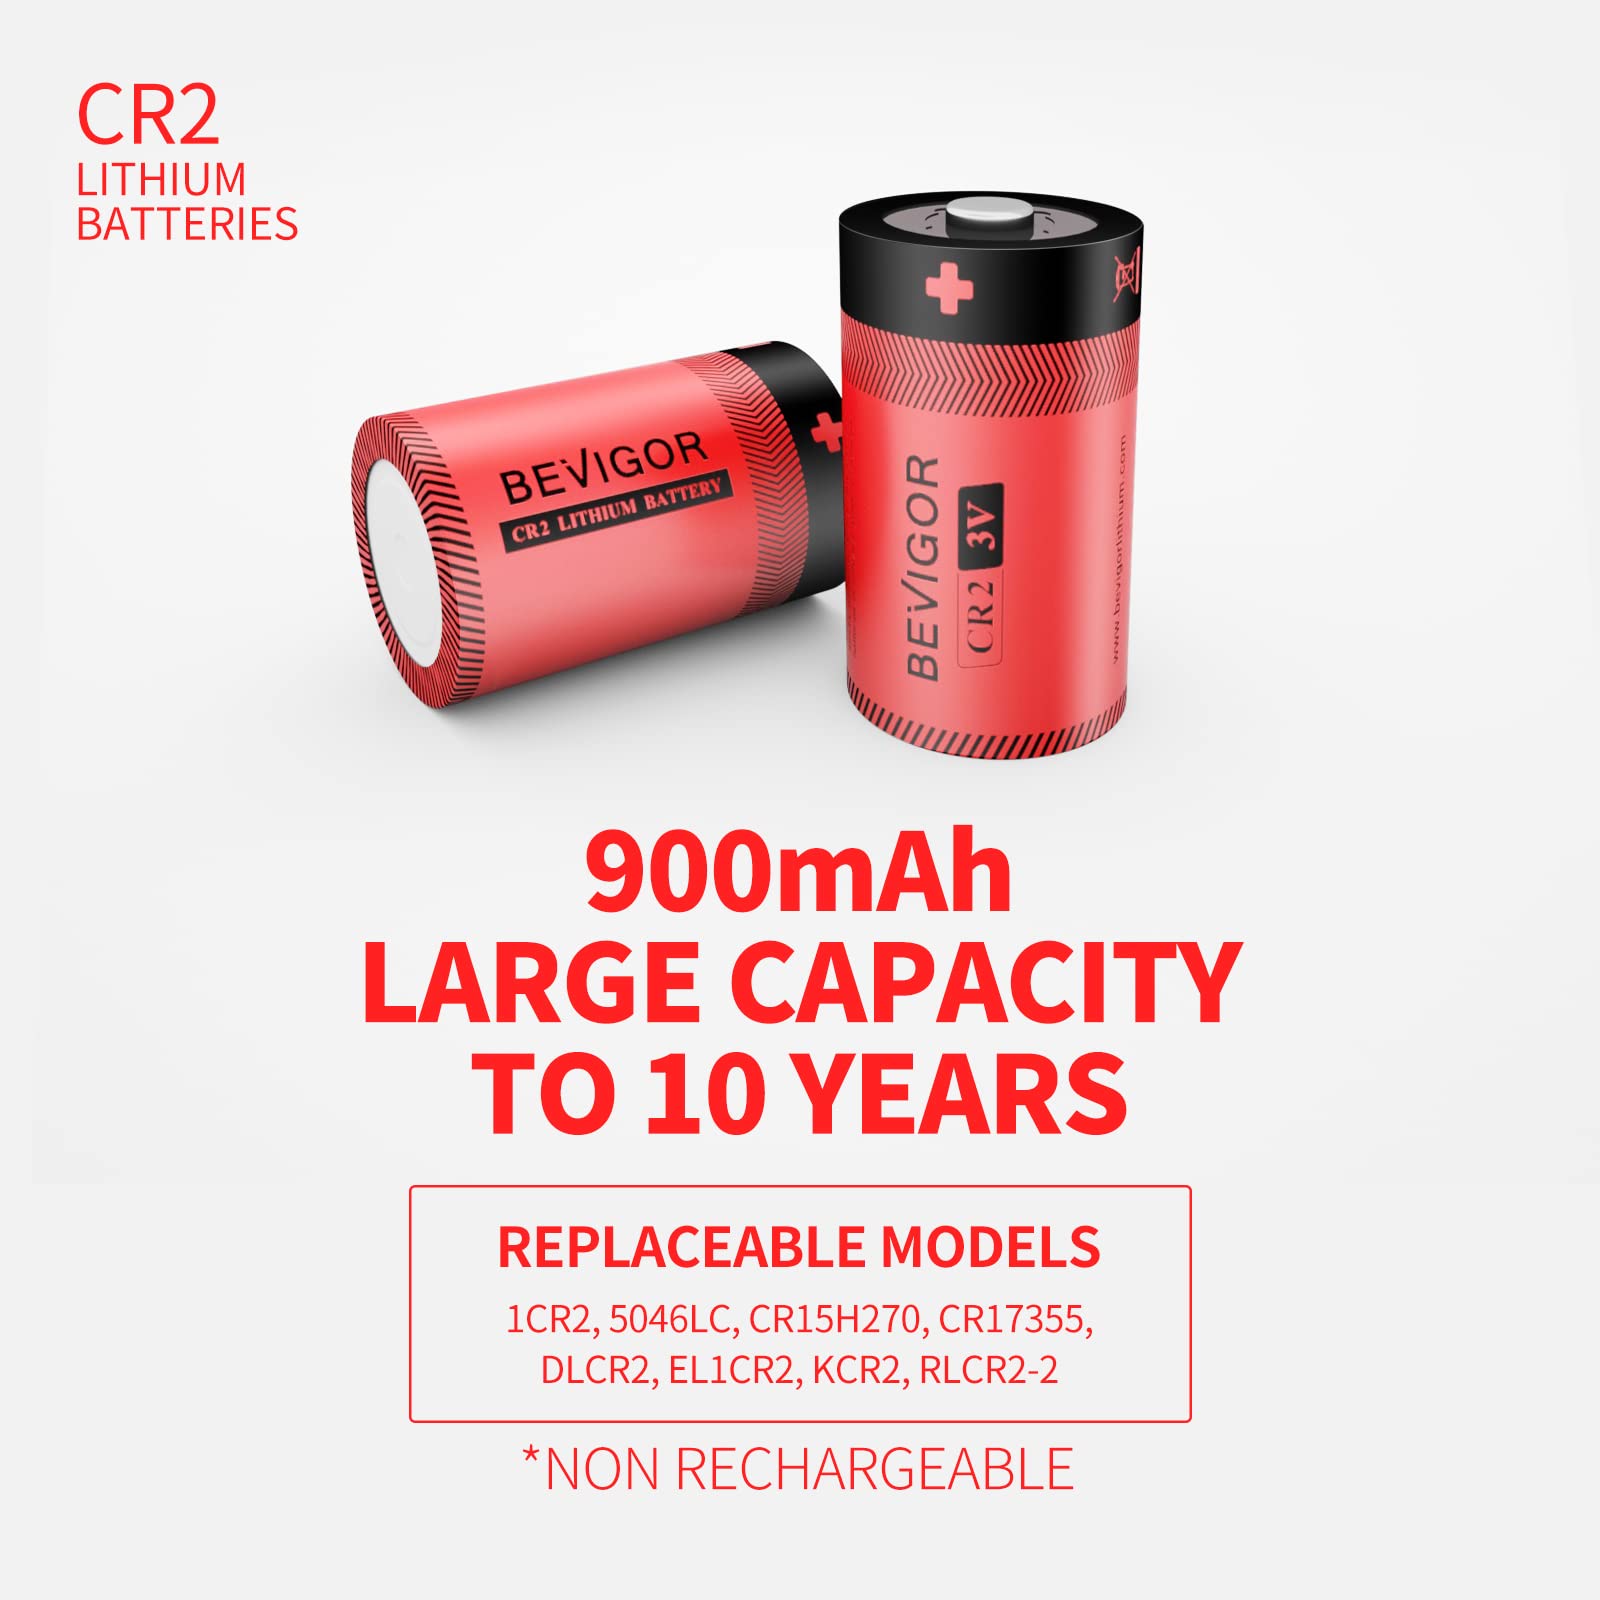 CR2 lithium batteries